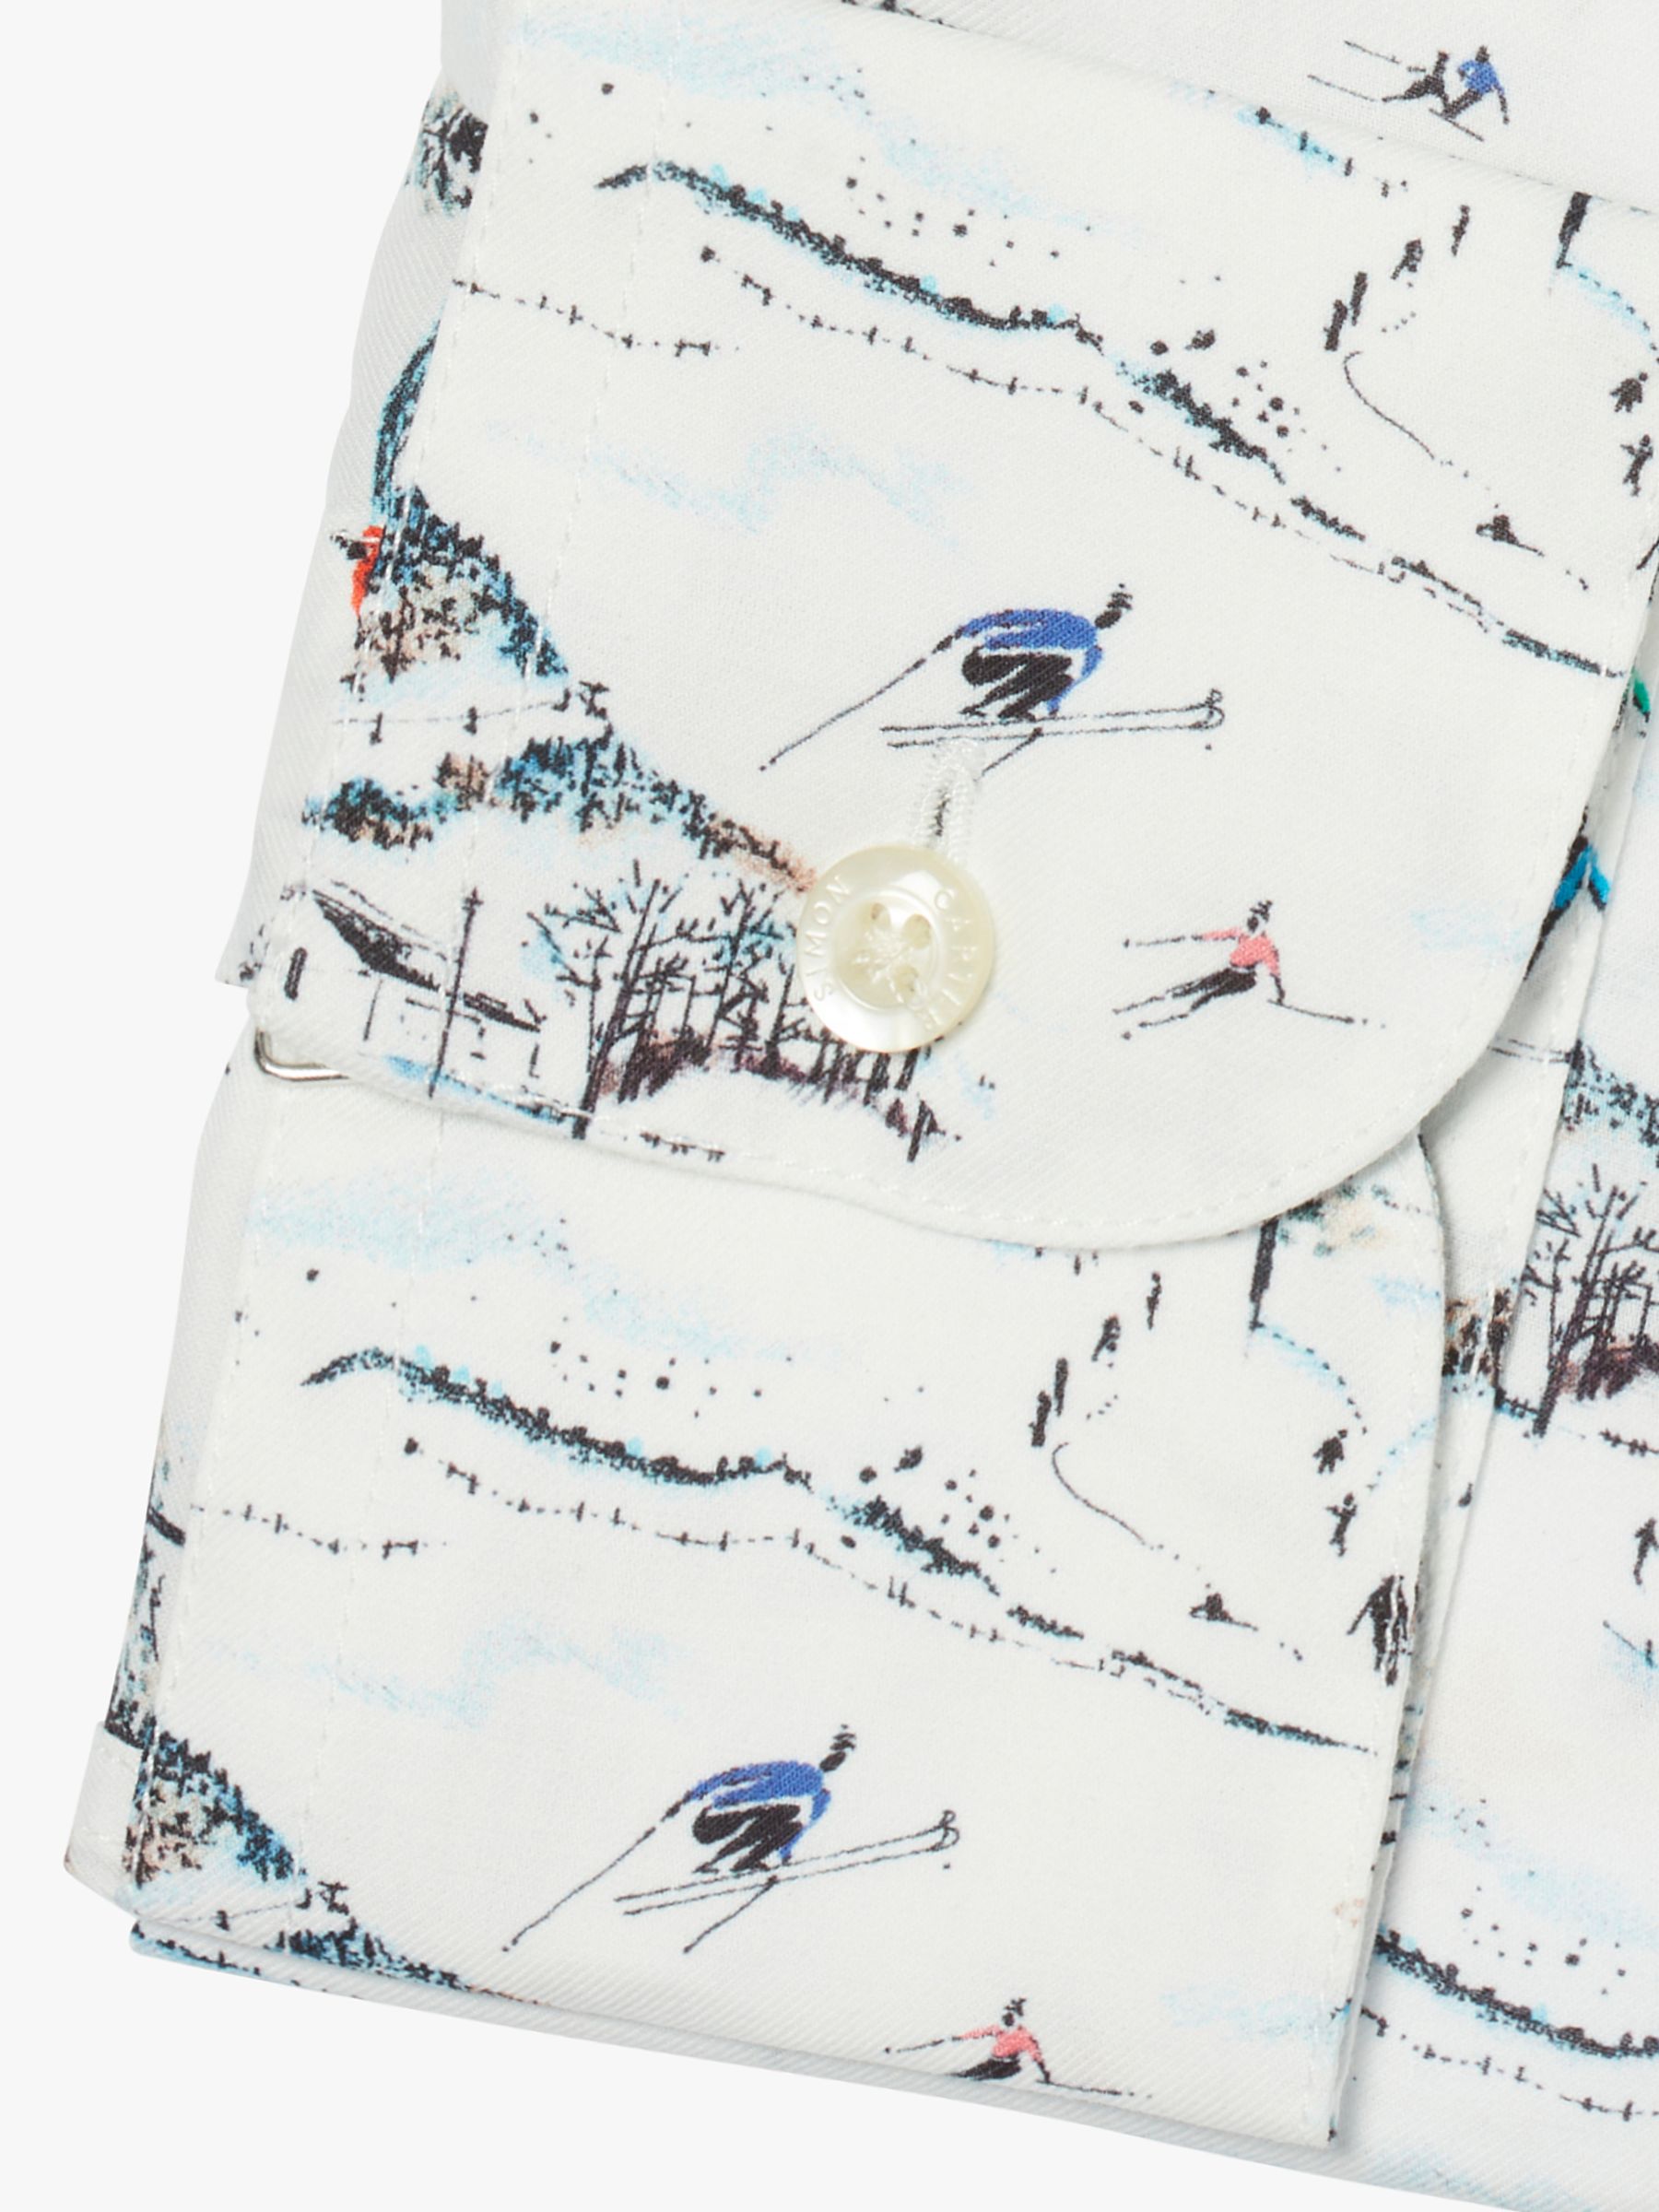 Buy Simon Carter Skiing Print Long Sleeve Shirt, White/Multi Online at johnlewis.com